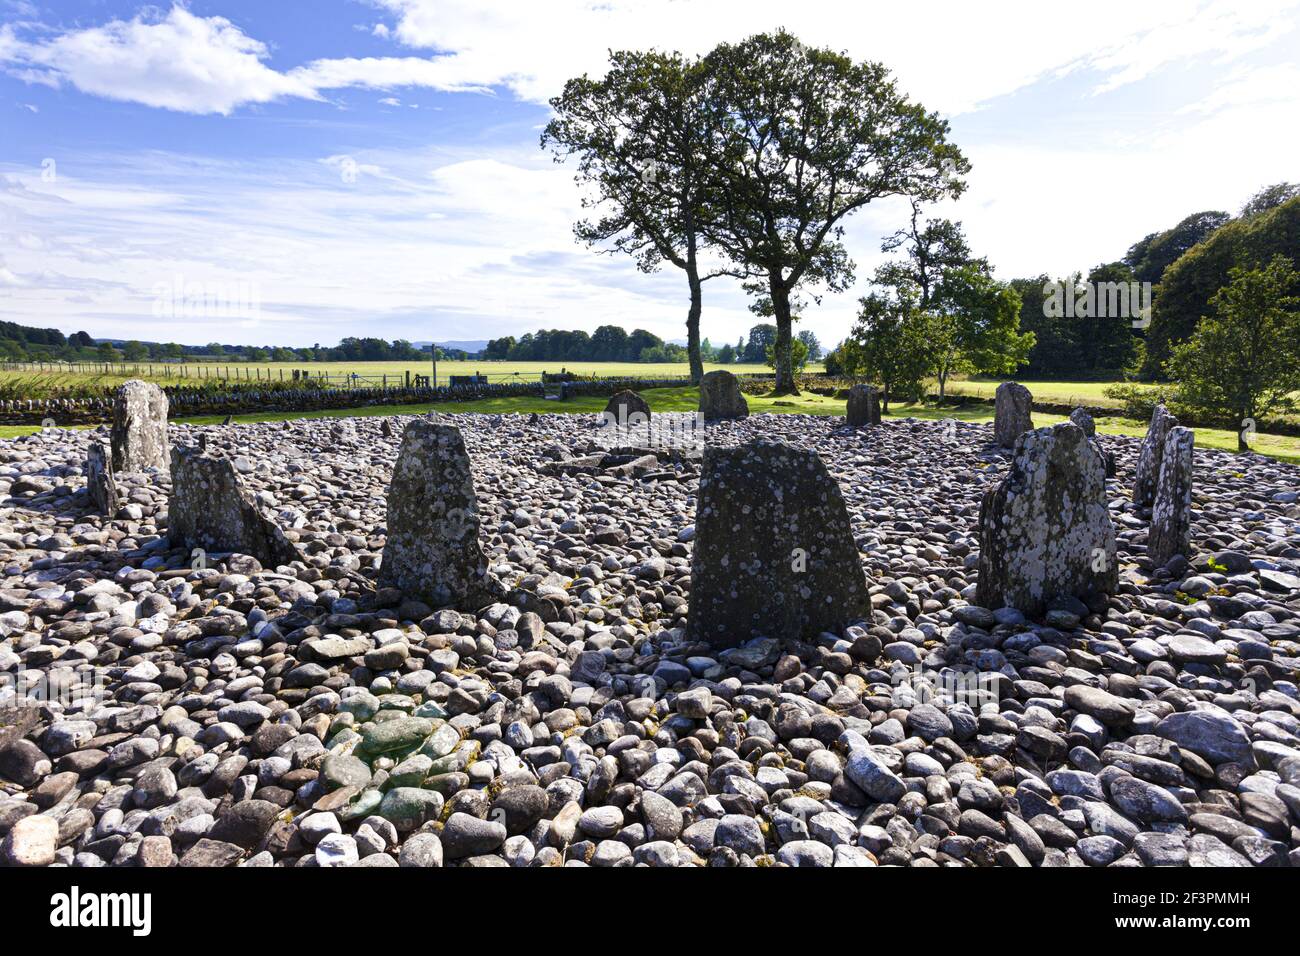 Temple Wood Stone Circle dating from c.3000BC in Kilmartin Glen, Argyll & Bute, Scotland UK Stock Photo